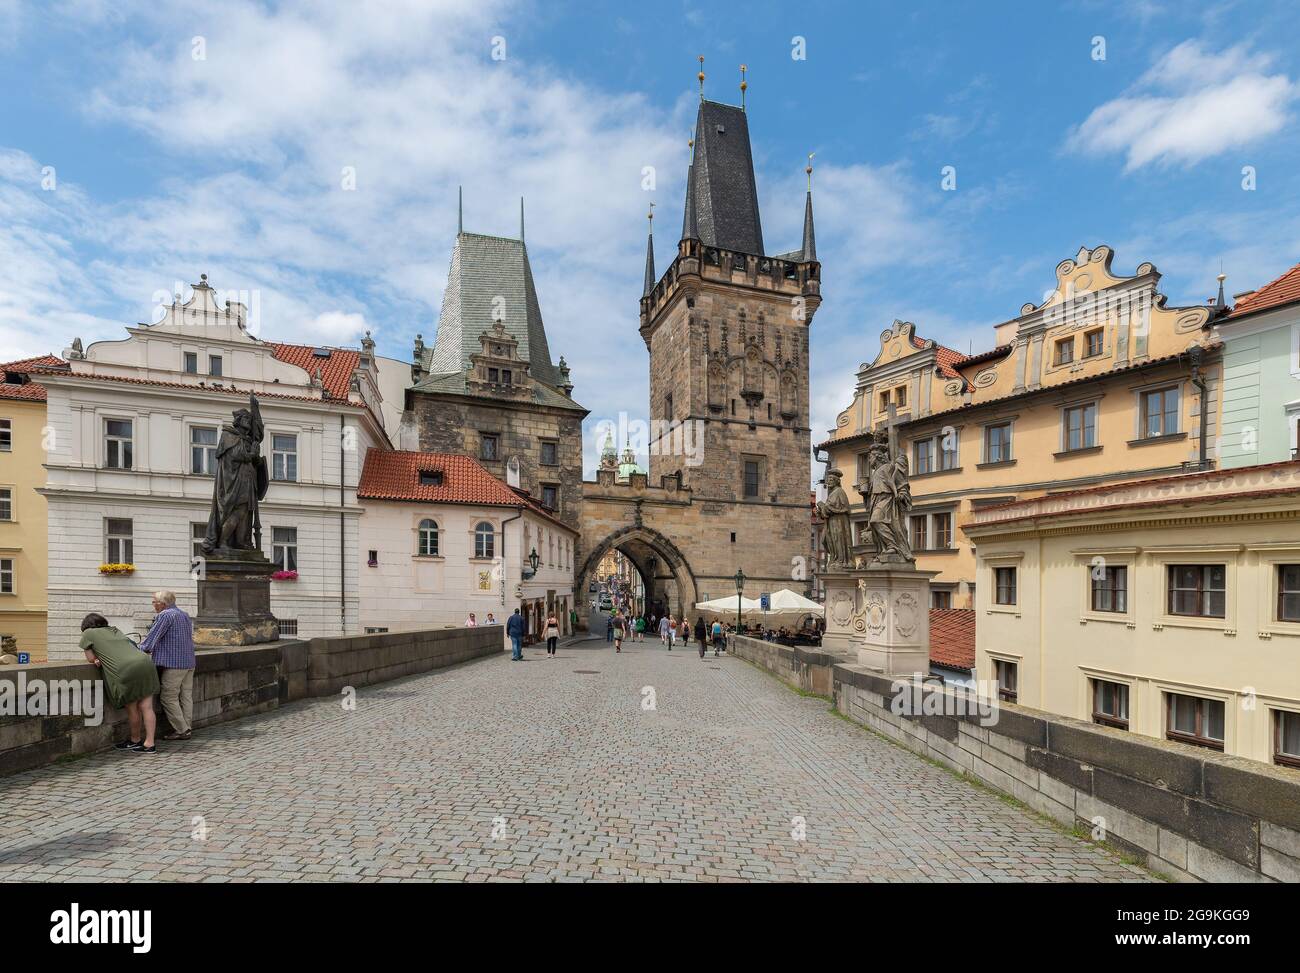 Architecture of the capital of the Czech Republic - Prague (Praha, Prag) Stock Photo